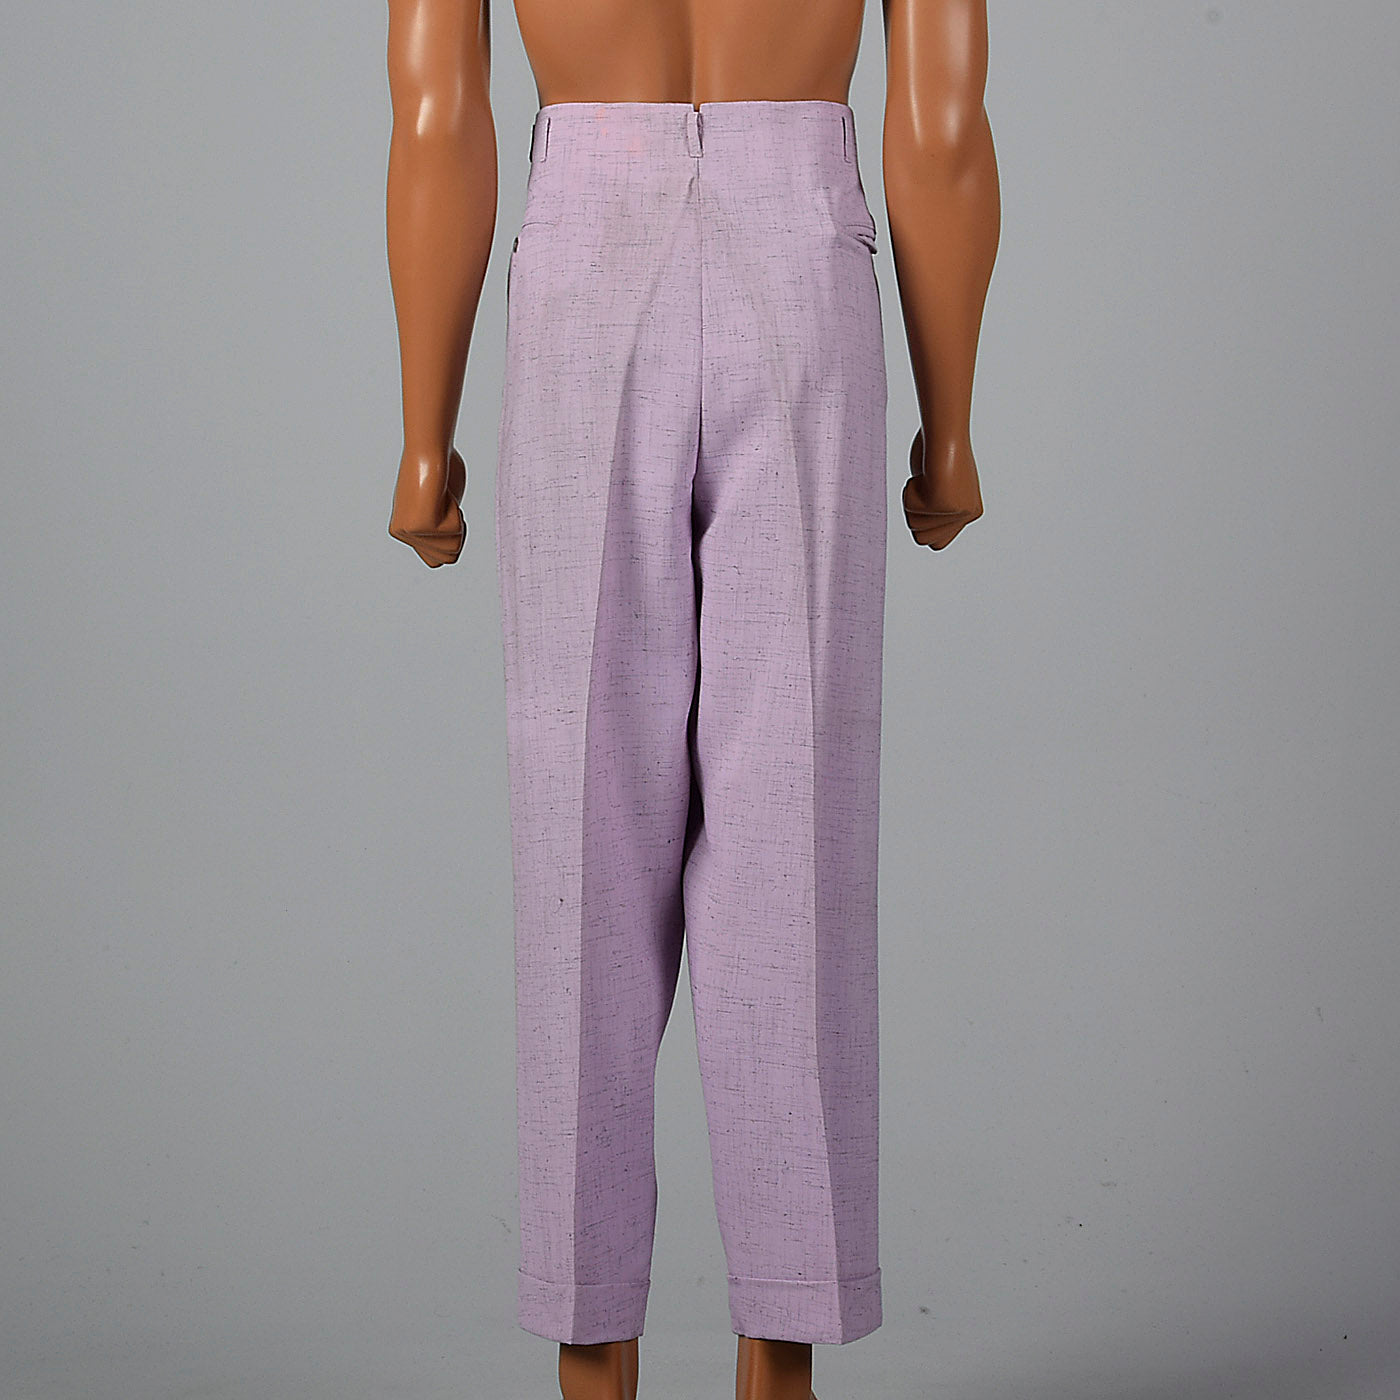 1950s Mens Hollywood Waist Pants Lavender Rayon with Gray Flecks